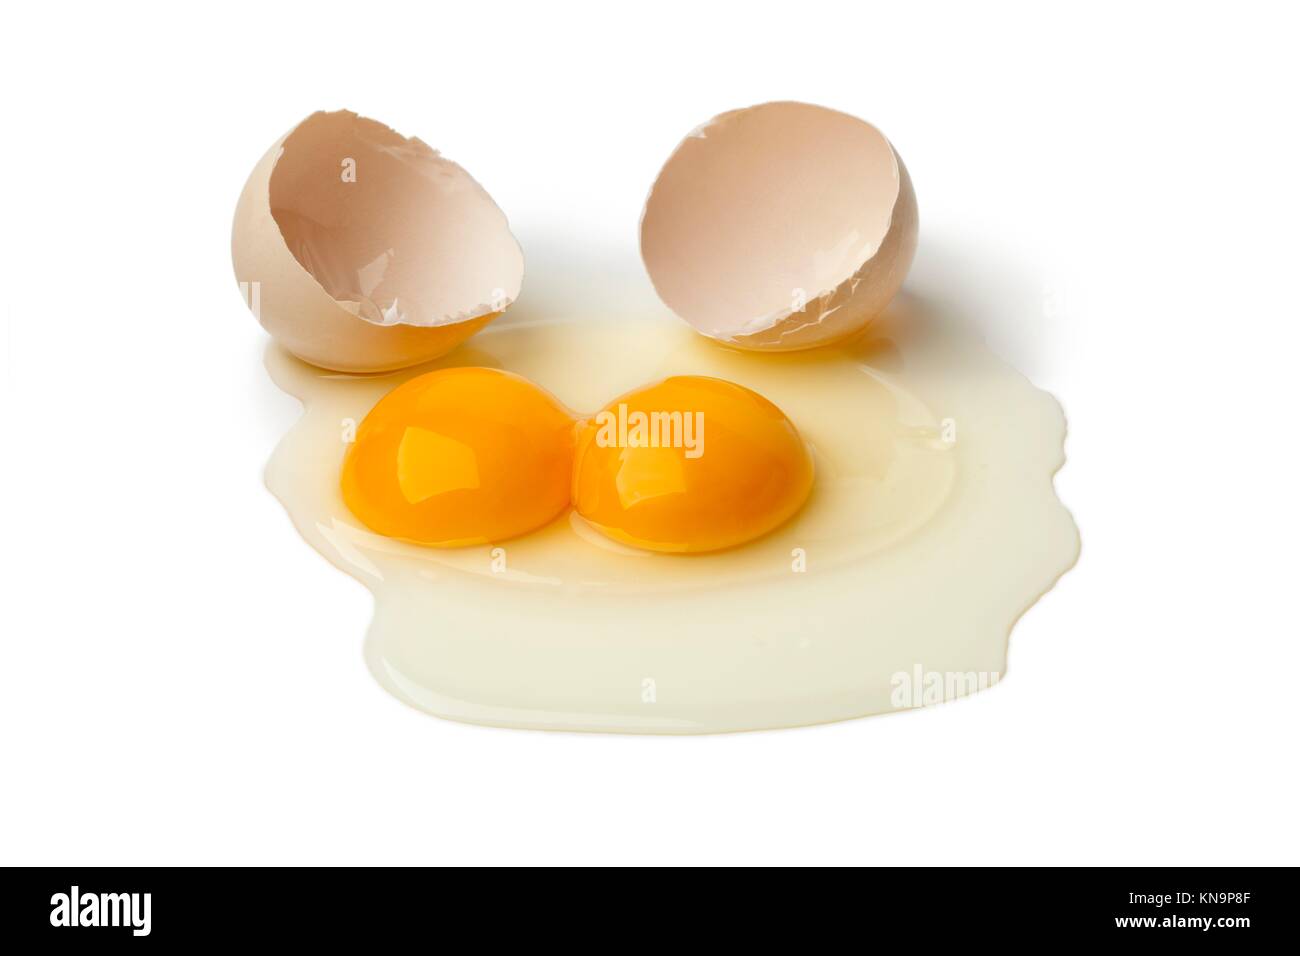 Broken raw double yolk egg on white background. Stock Photo